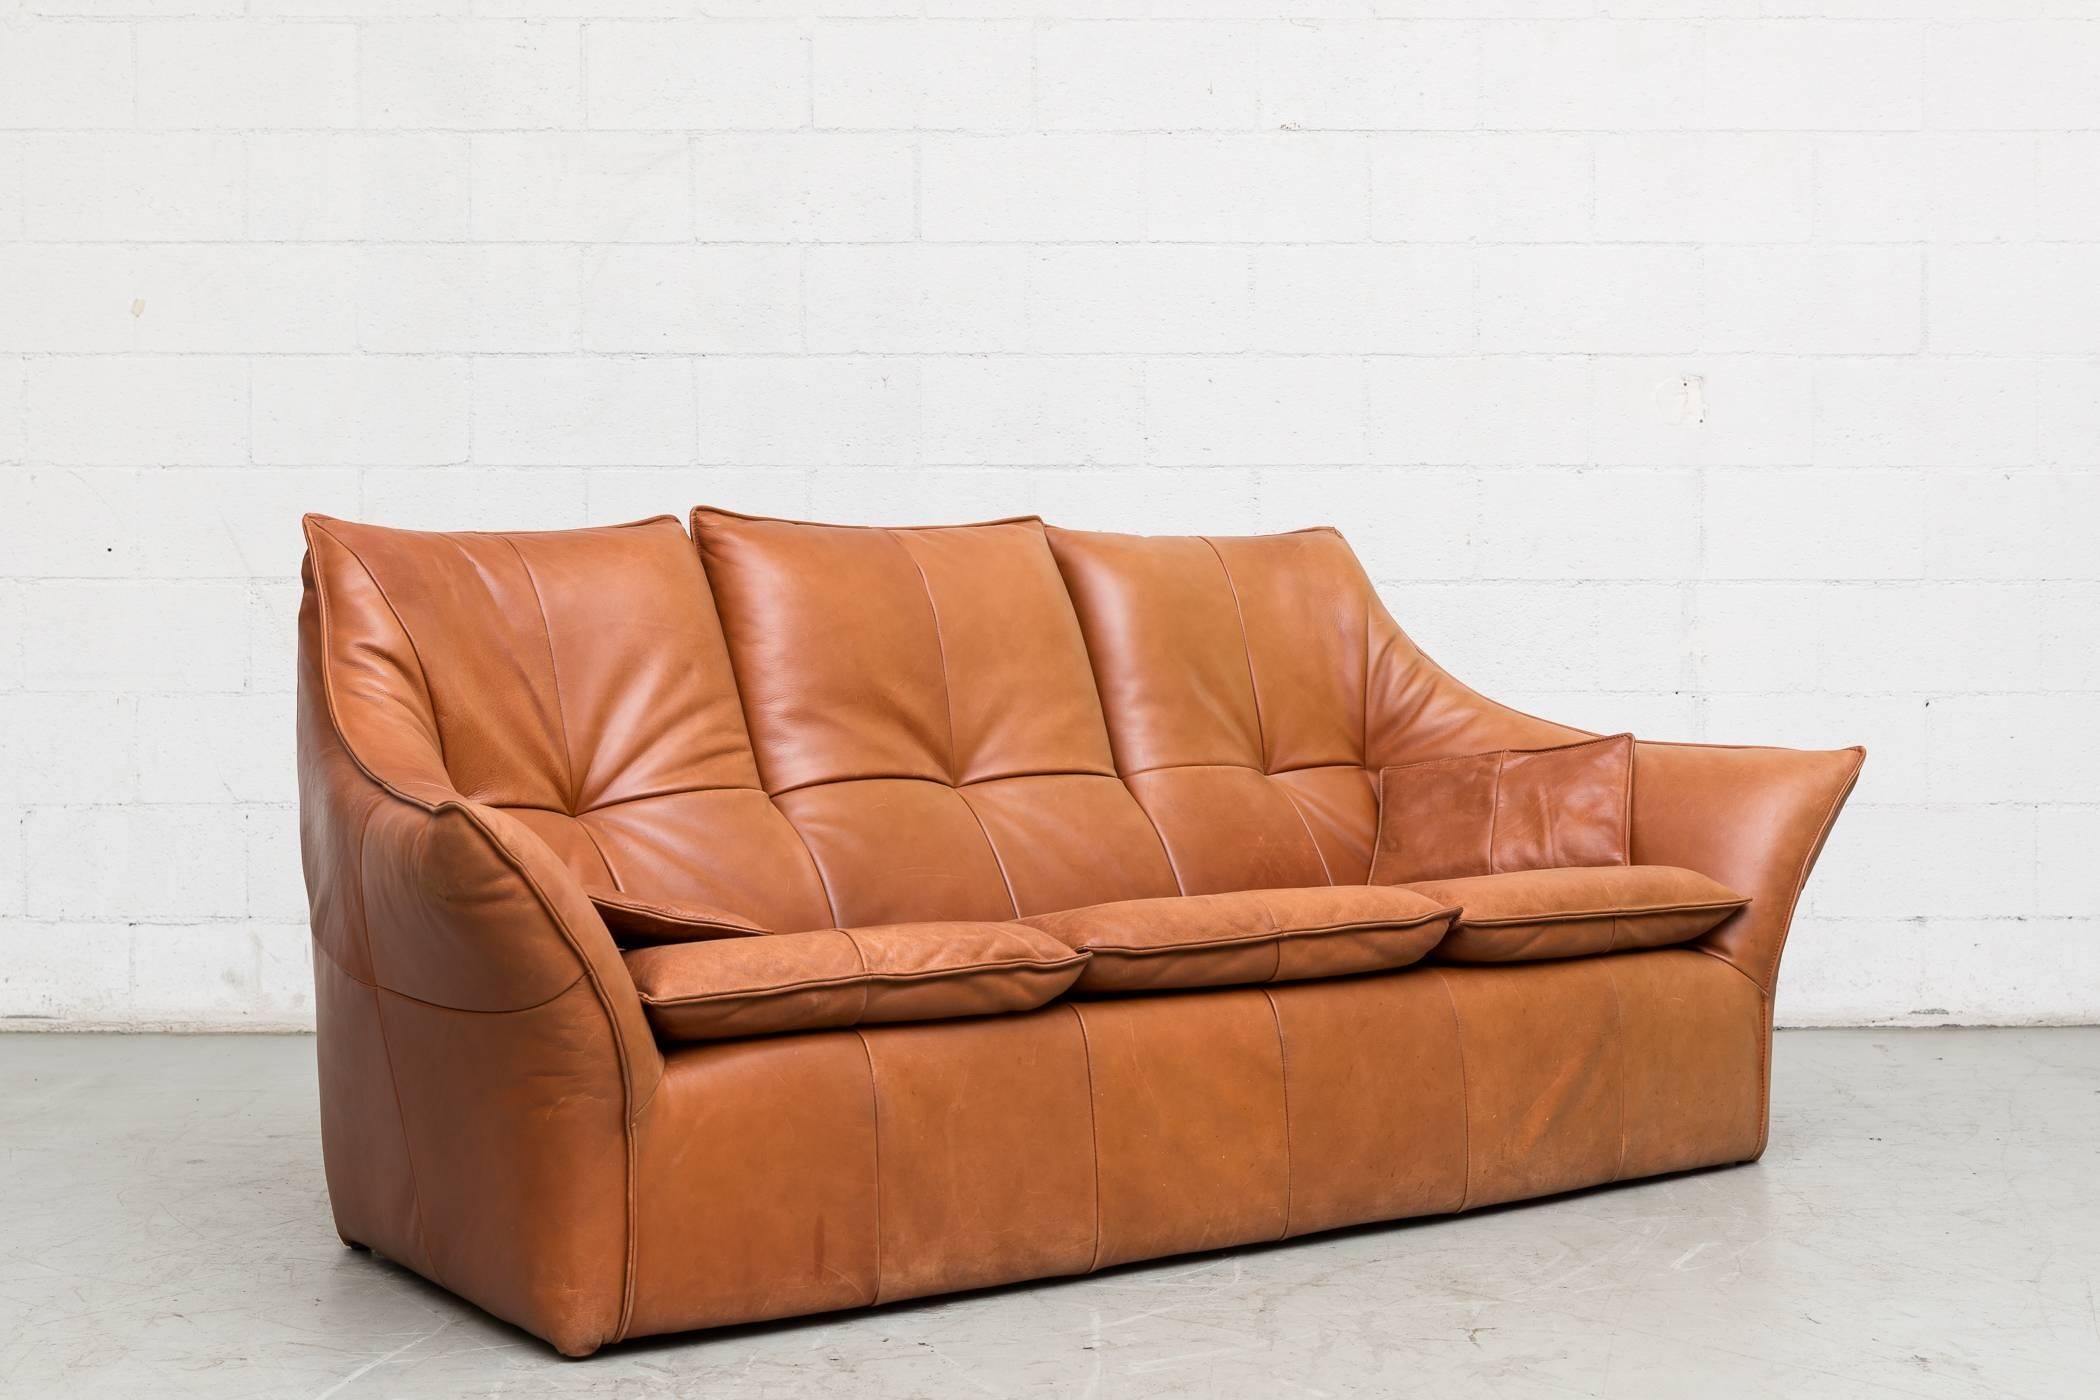 Leather Gerard Van Den Berg Denver Three-Seat Sofa